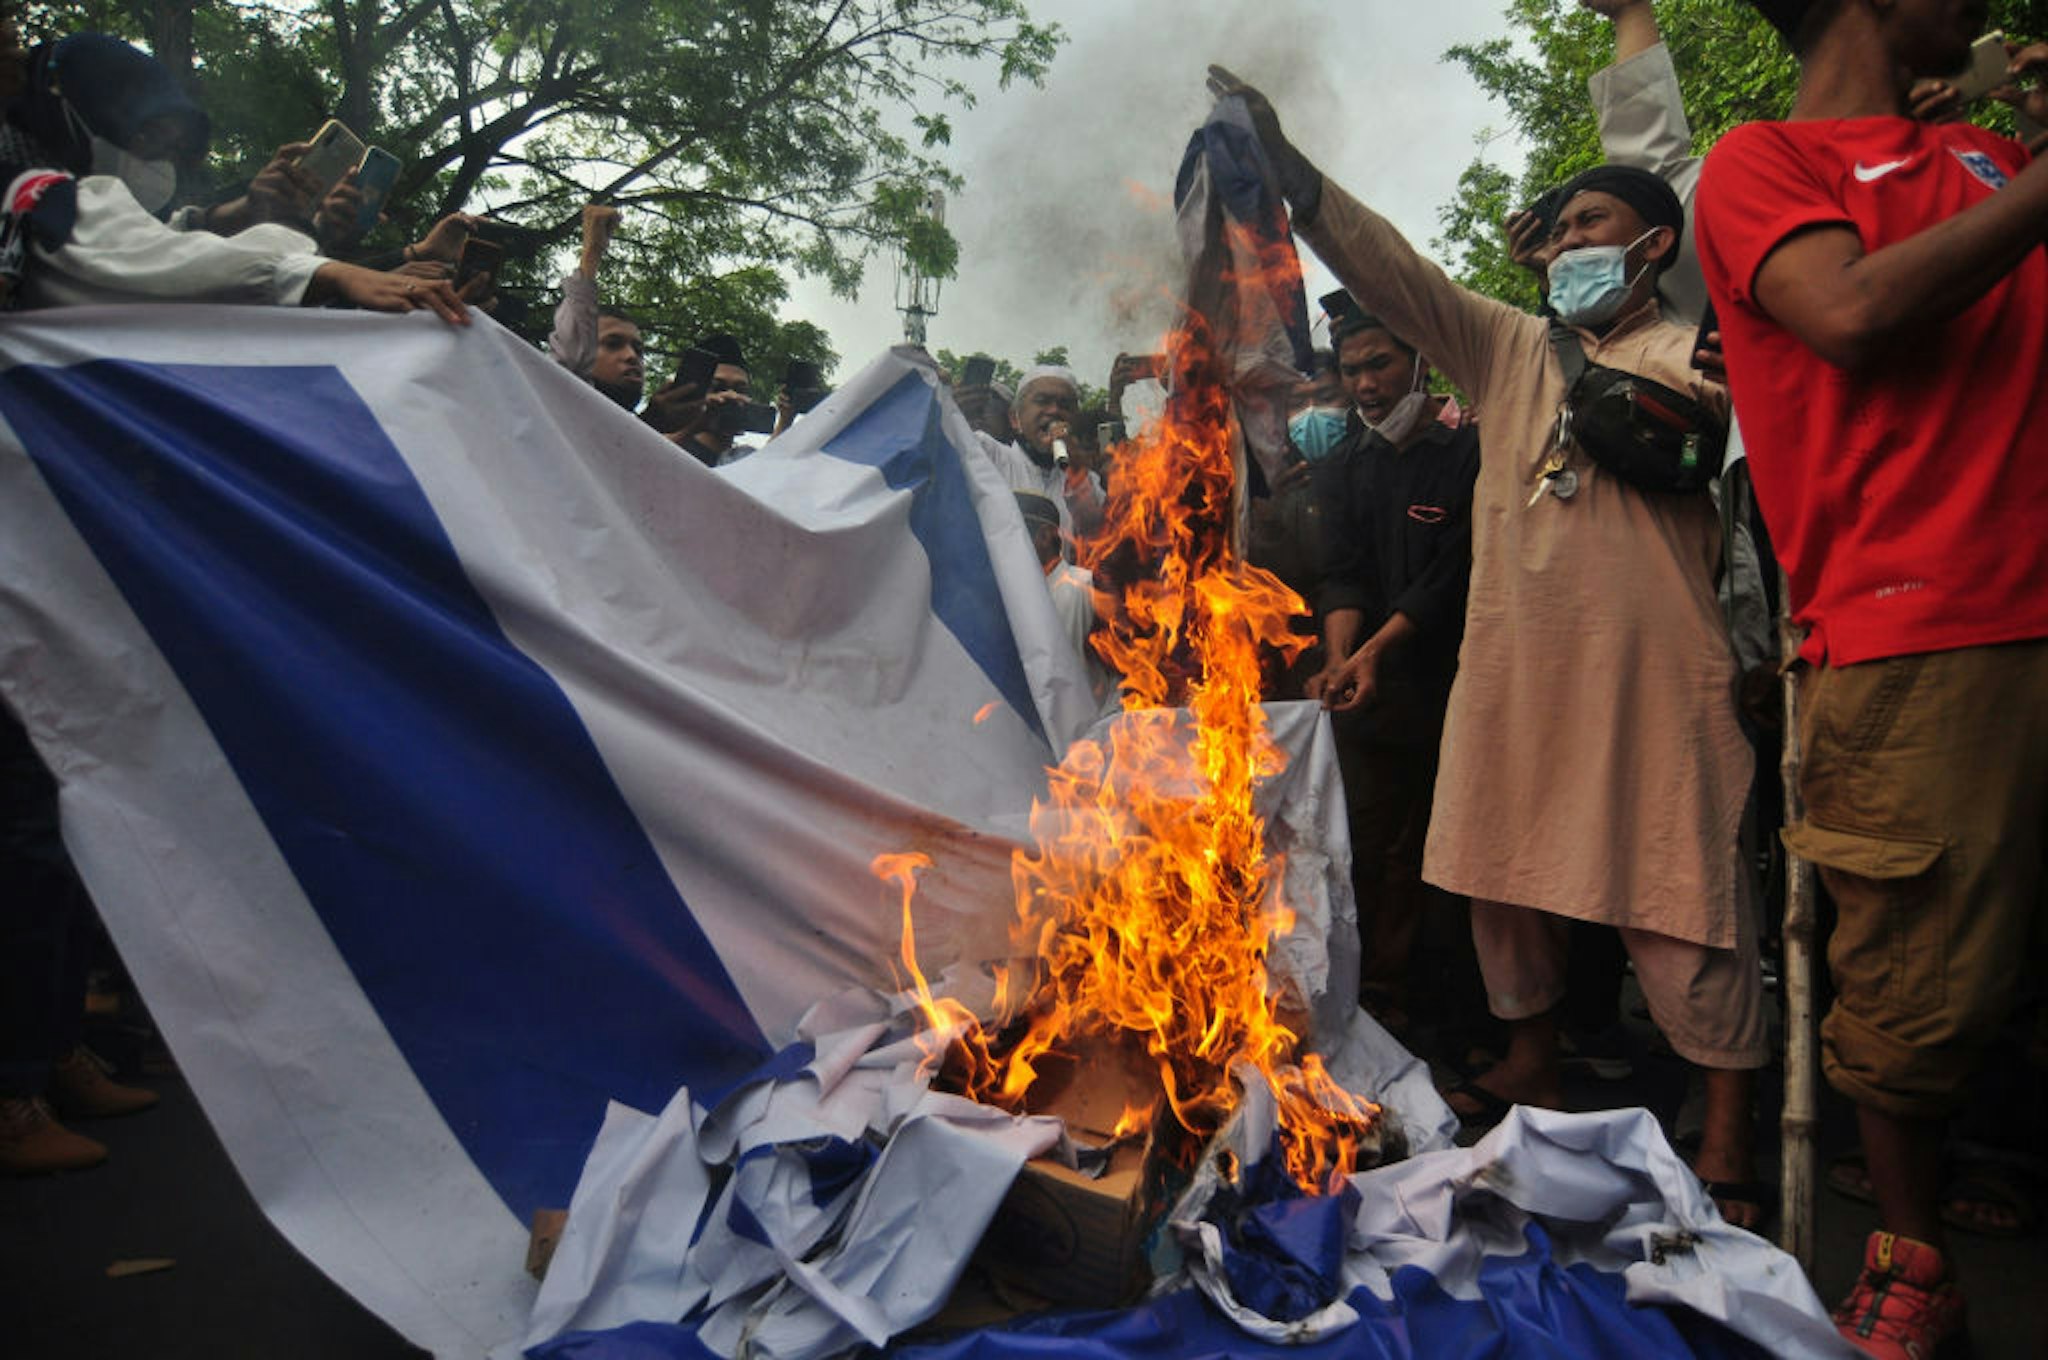 Burning Israeli flag